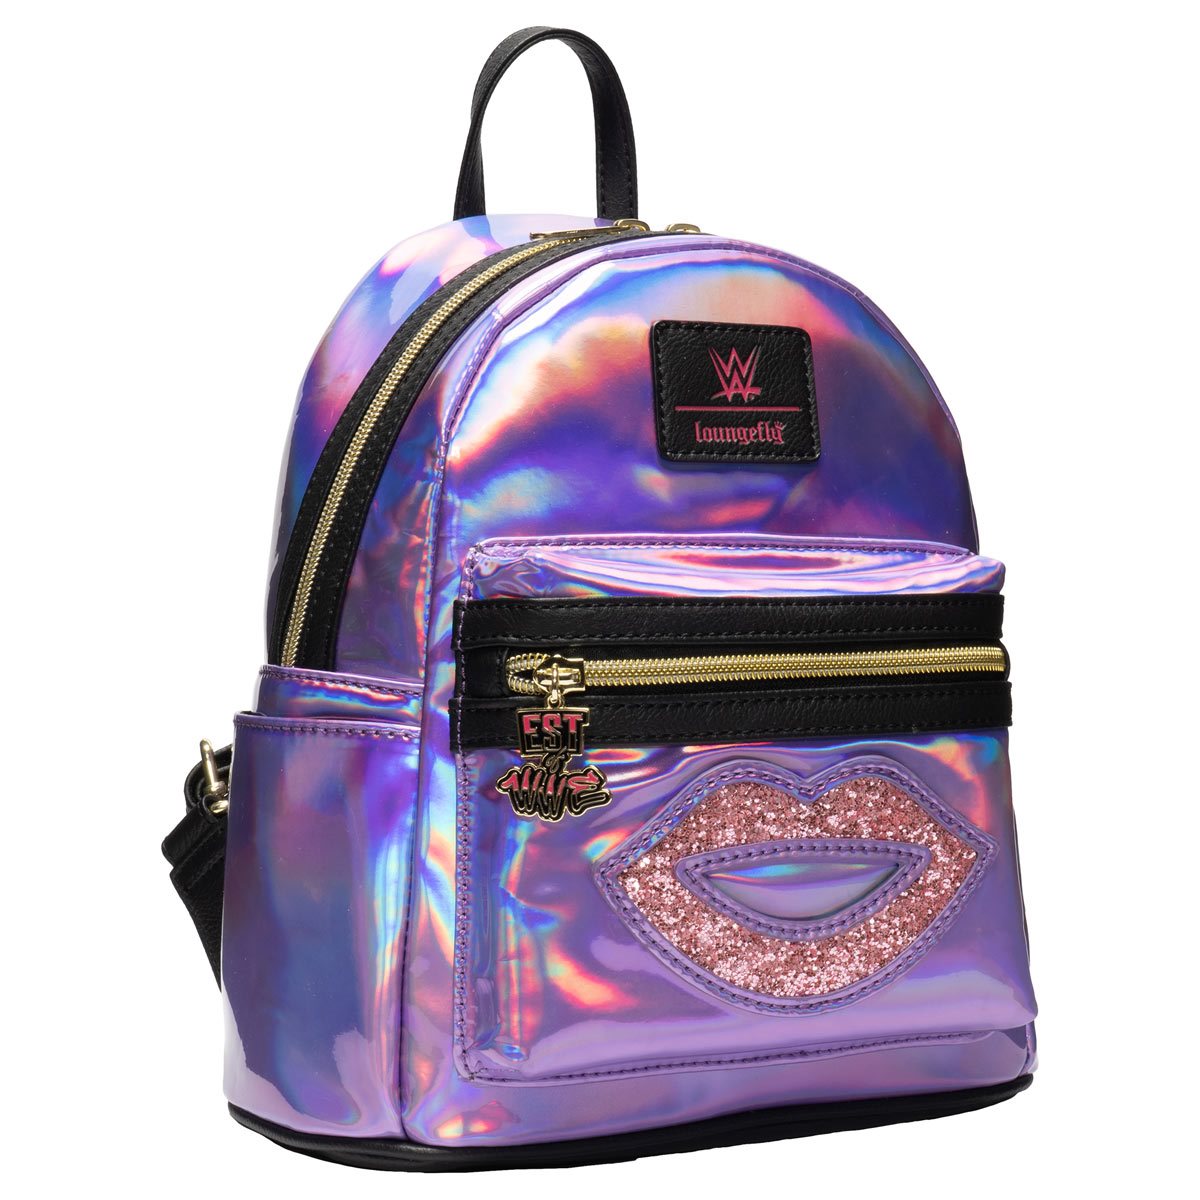 Bianca Belair Superstar Backpack